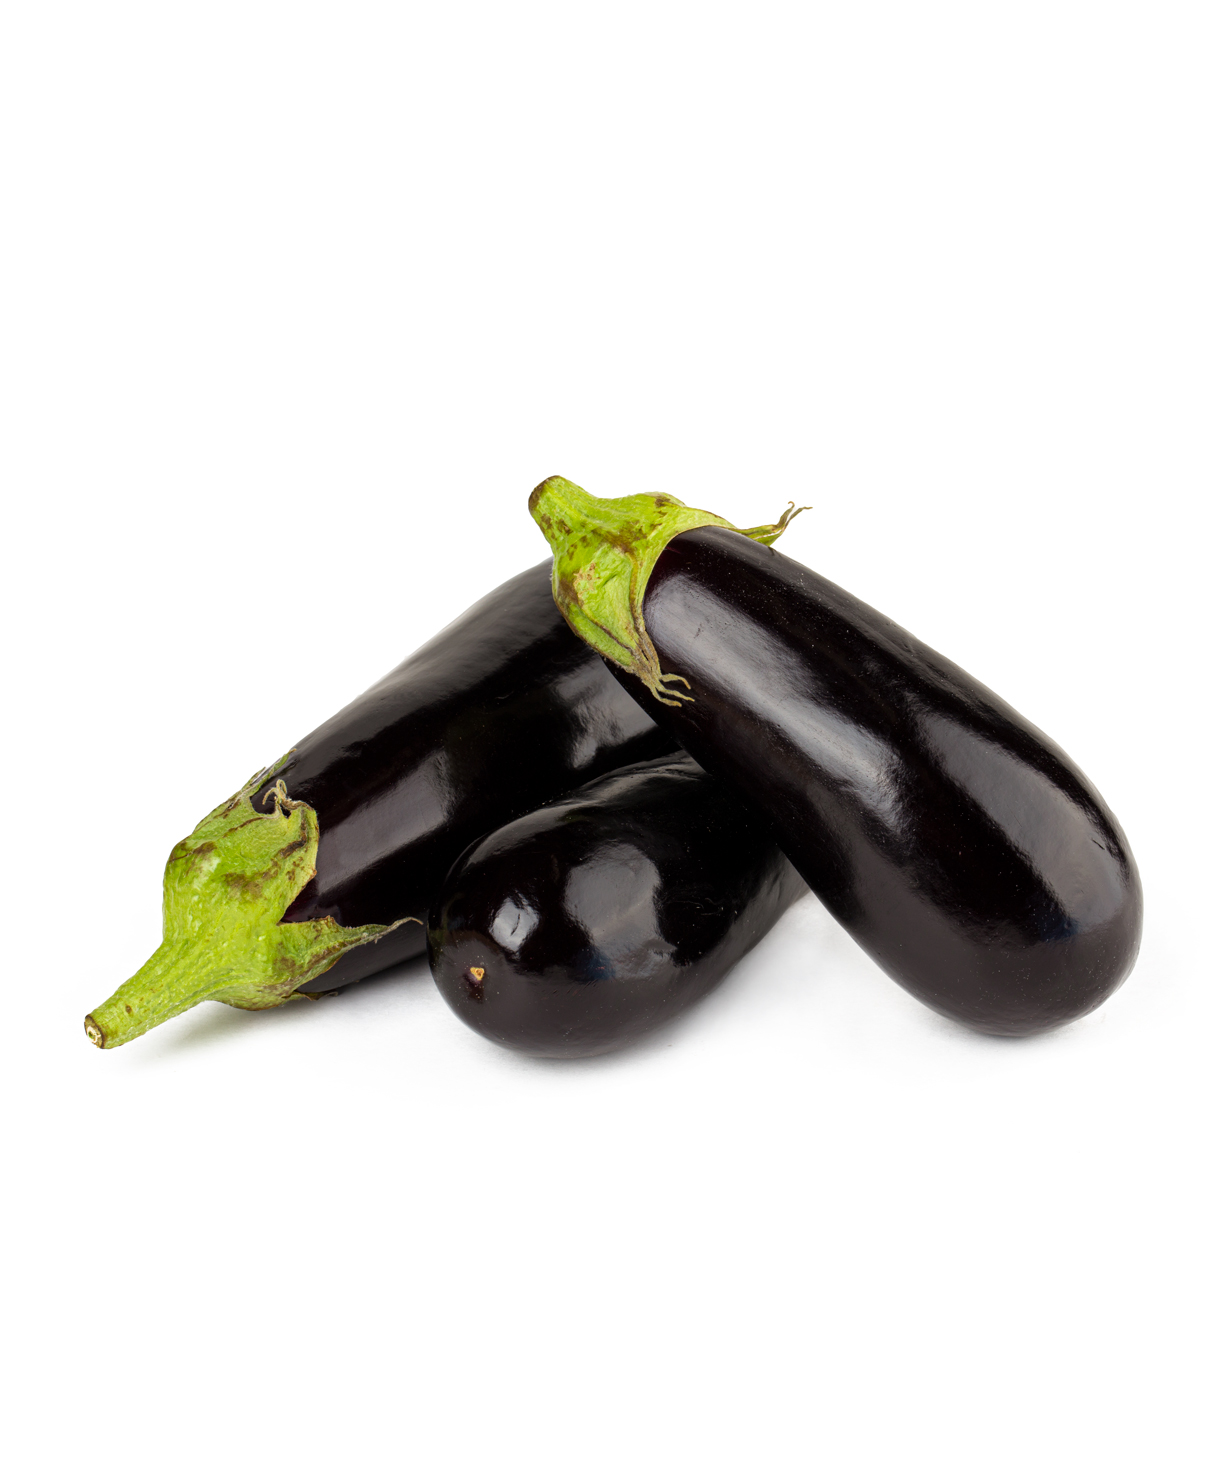 Eggplant 1 kg